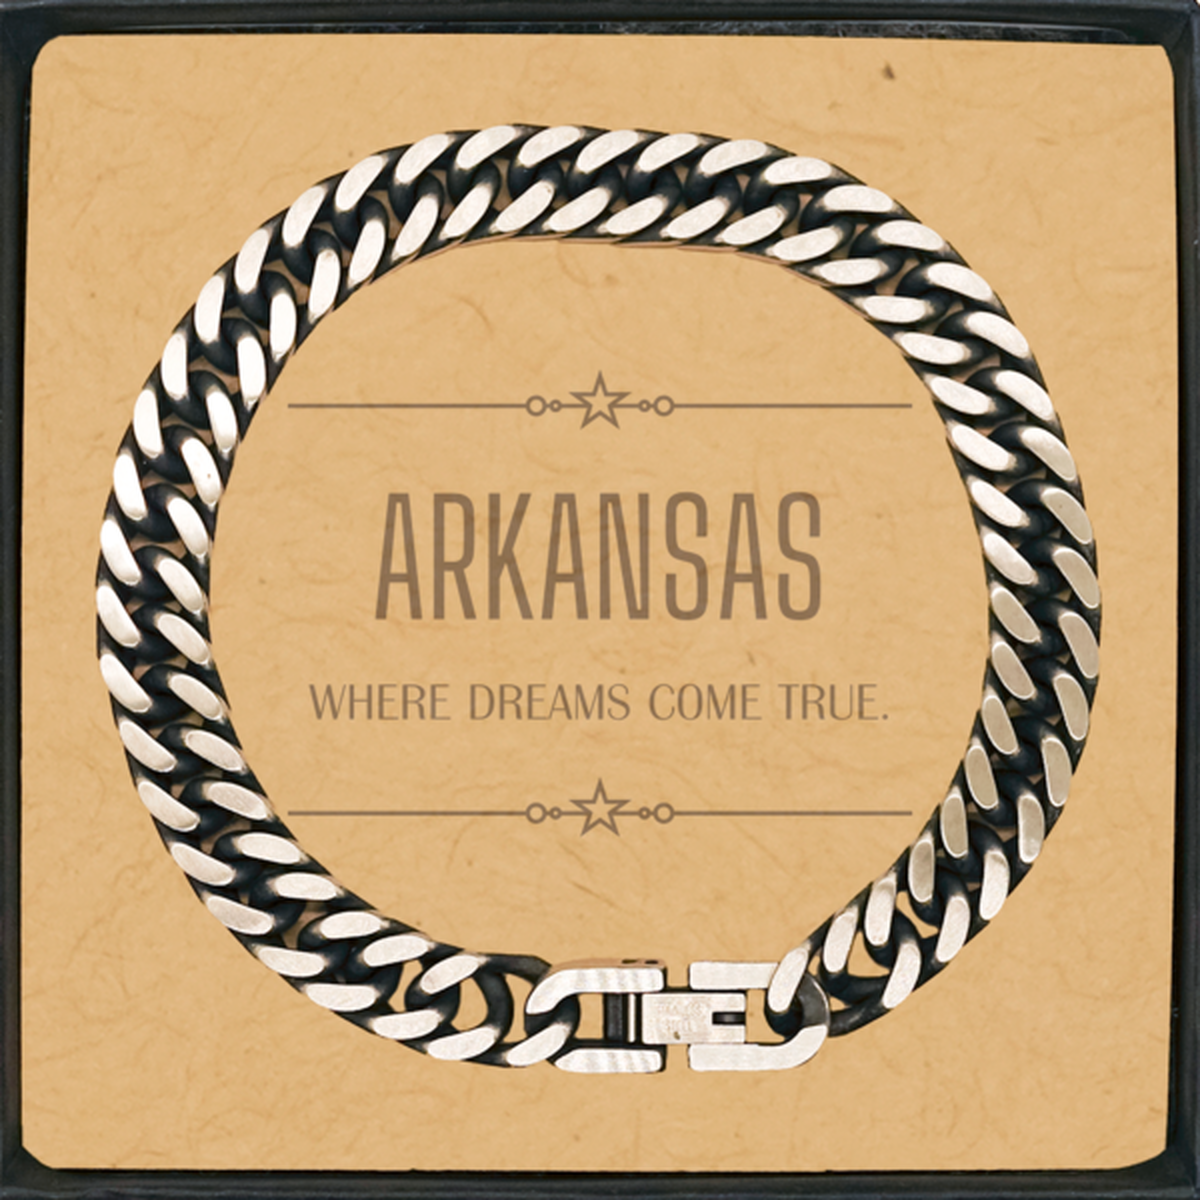 Love Arkansas State Cuban Link Chain Bracelet, Arkansas Where dreams come true, Birthday Inspirational Gifts For Arkansas Men, Women, Friends